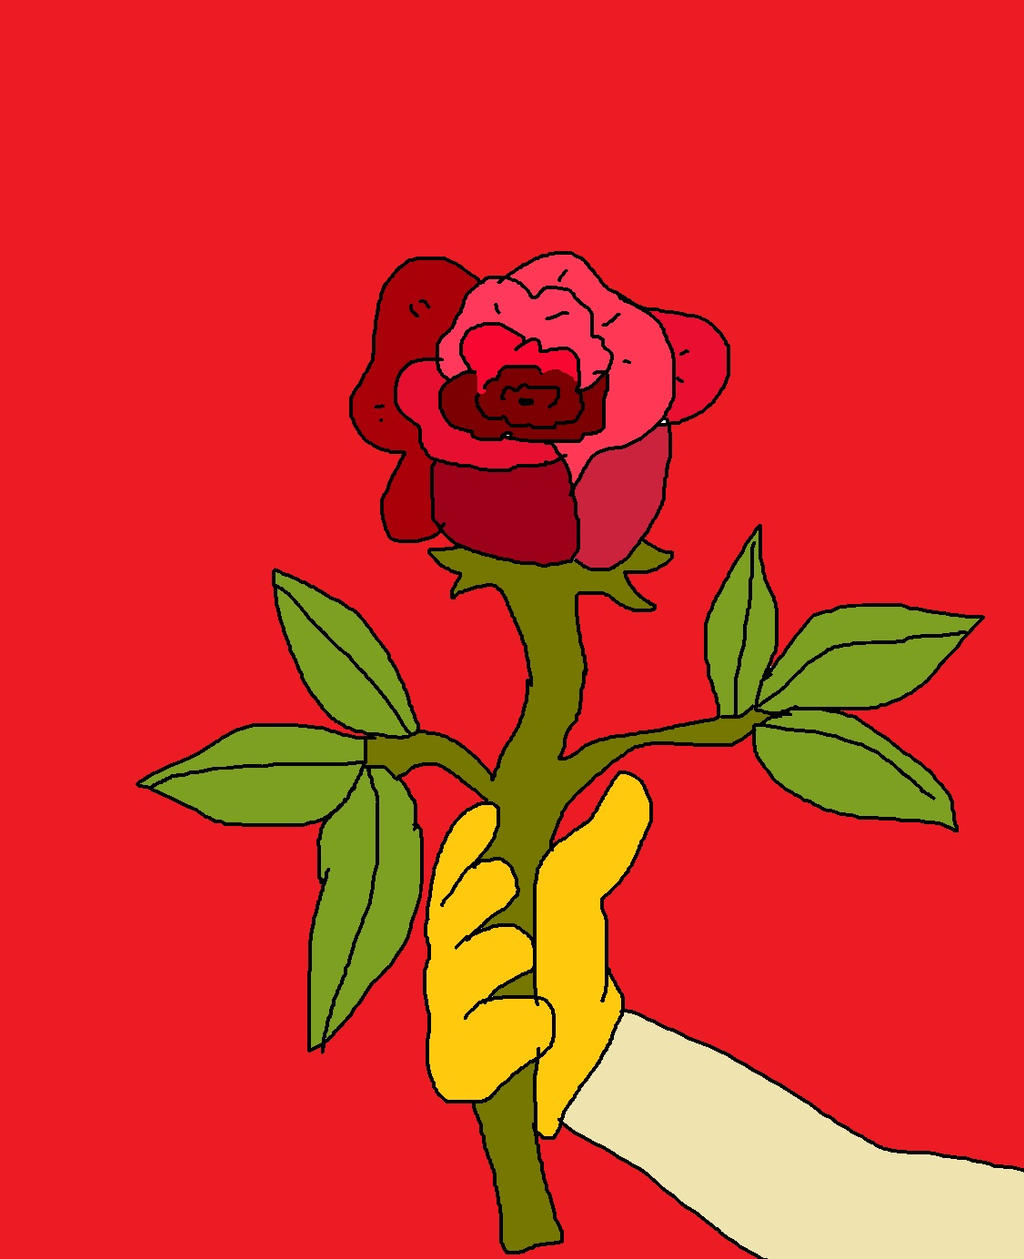 My take on drawing a rose by SuperSaiyanCrash on DeviantArt